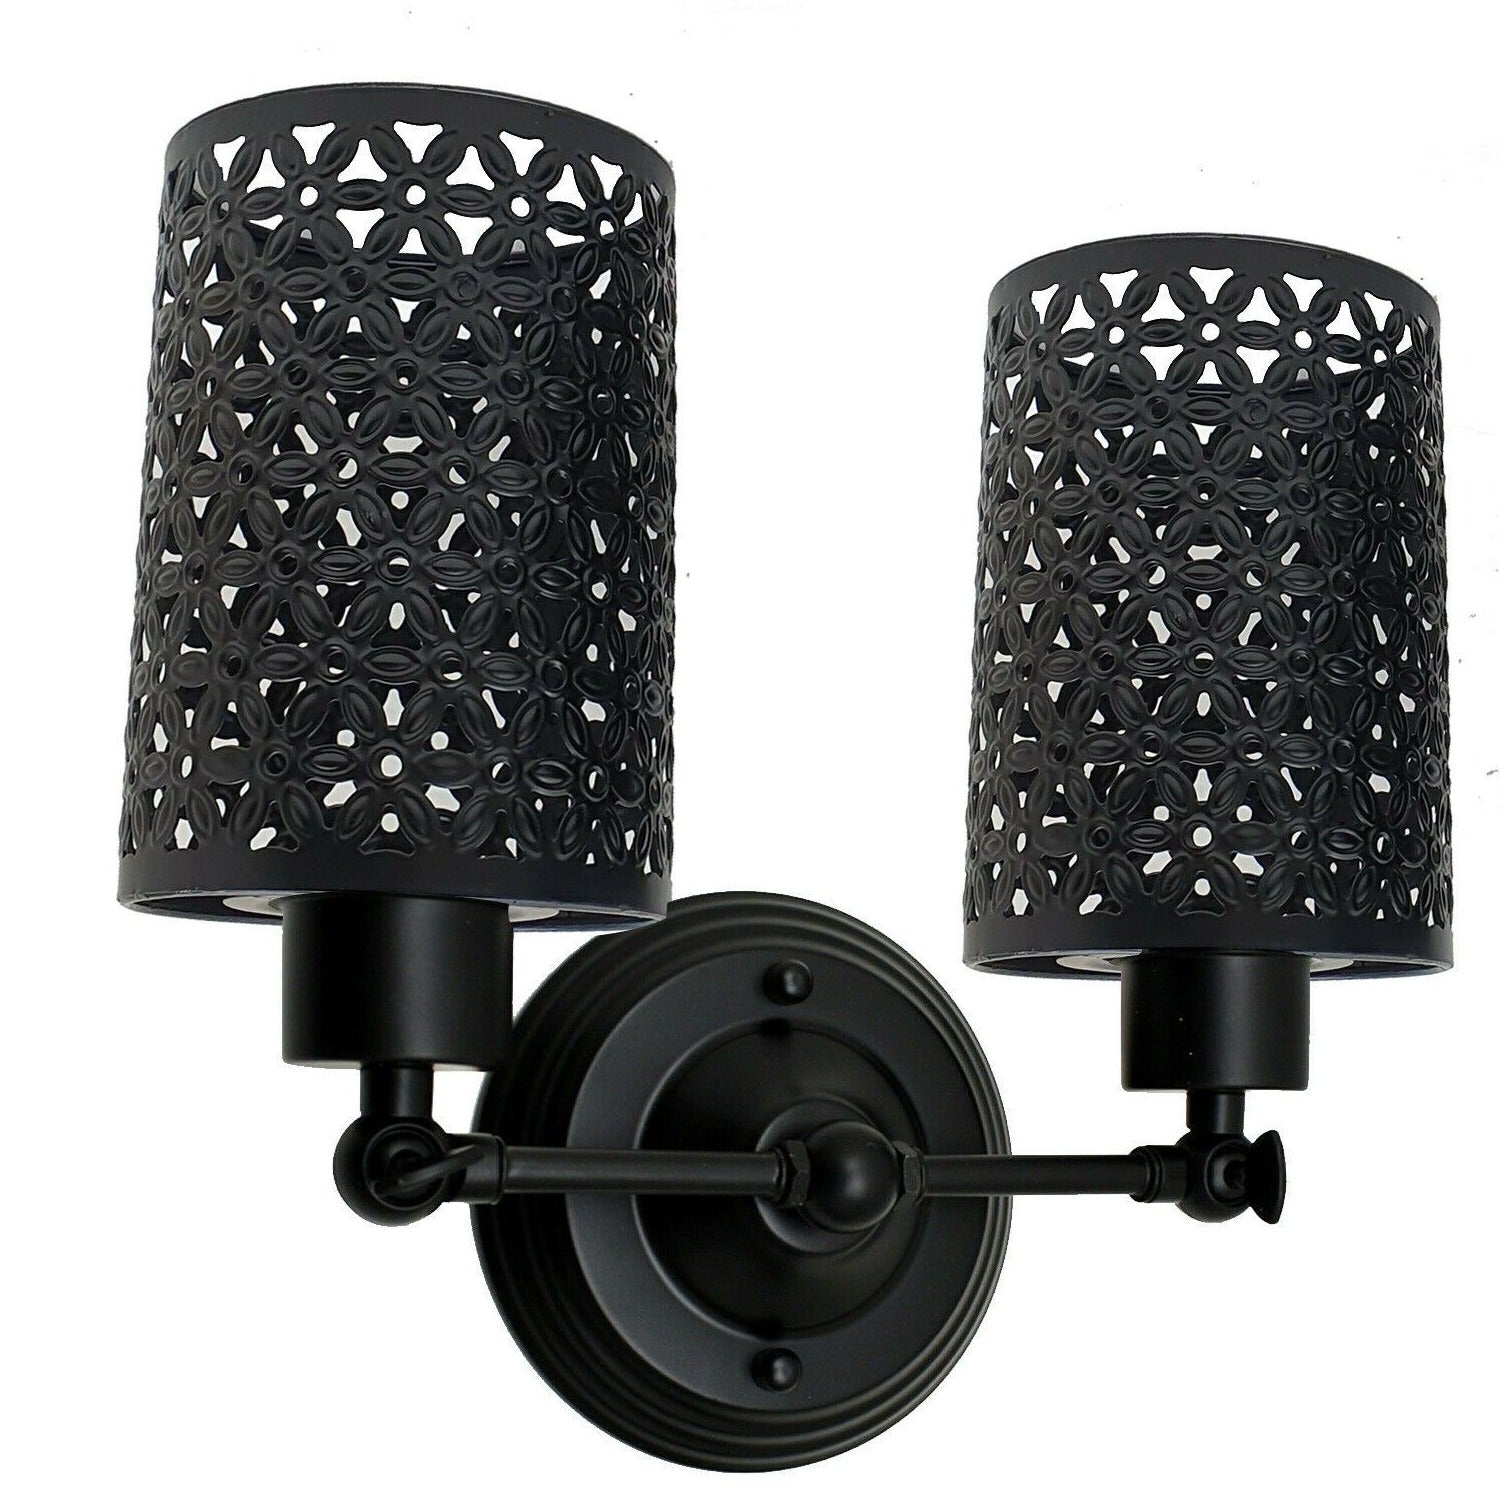 Modern Retro Black Vintage Industrial Wall Mounted Lights Rustic Wall Sconce Lamps Fixture~2283 - LEDSone UK Ltd